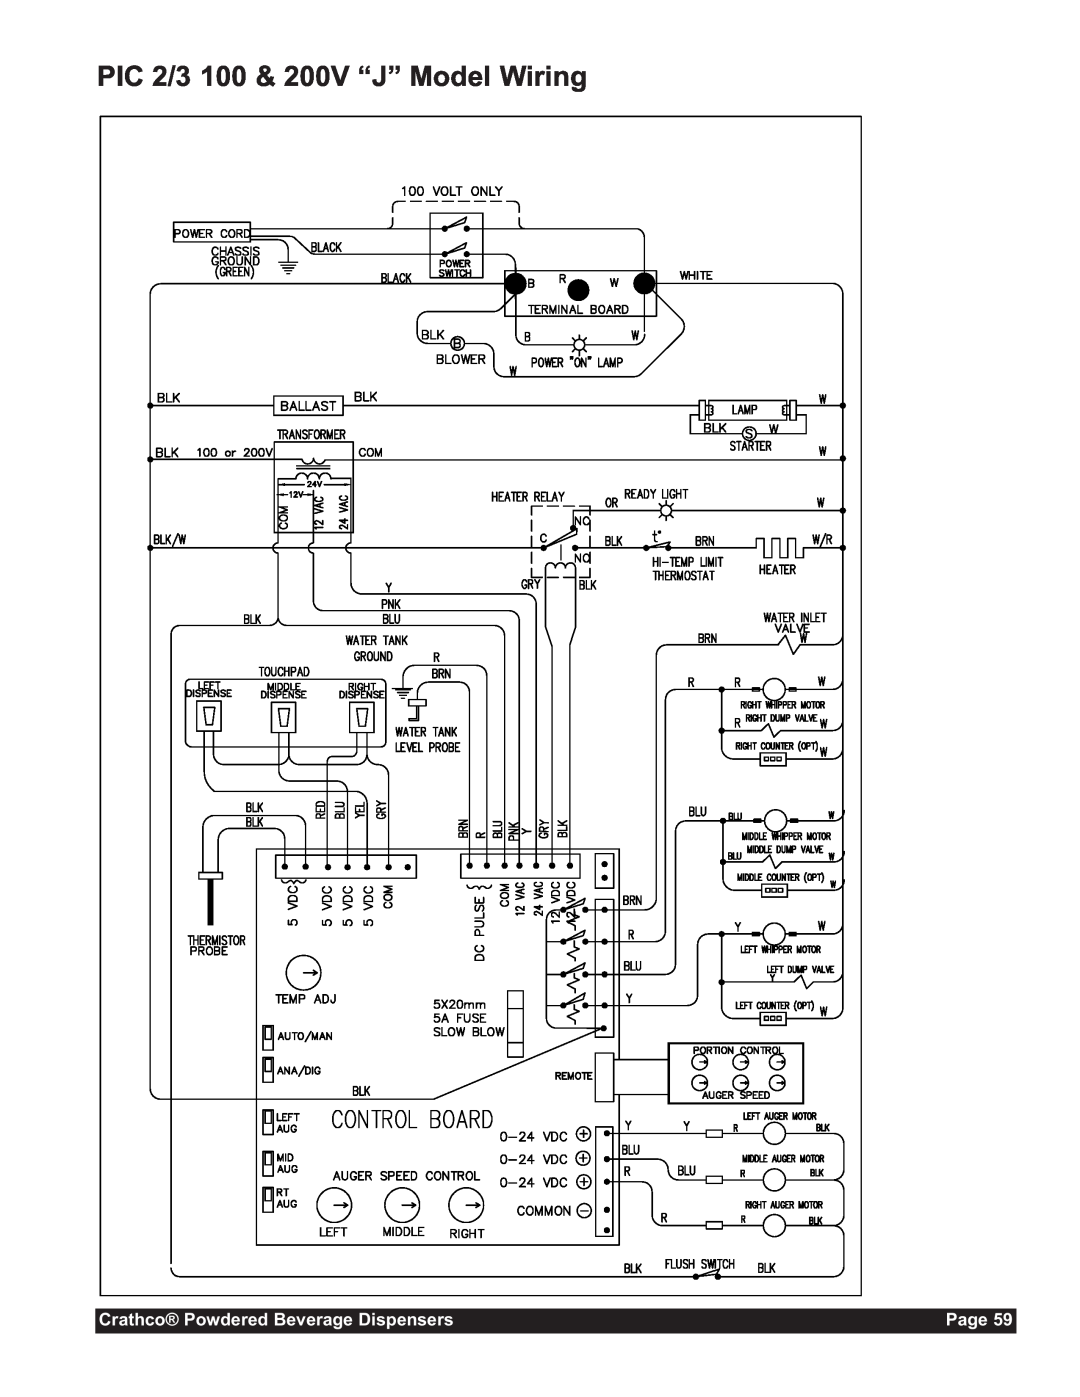 Grindmaster CC-302-20 service manual PIC 2/3 100 & 200V “J” Model Wiring, Crathco Powdered Beverage Dispensers, Page 